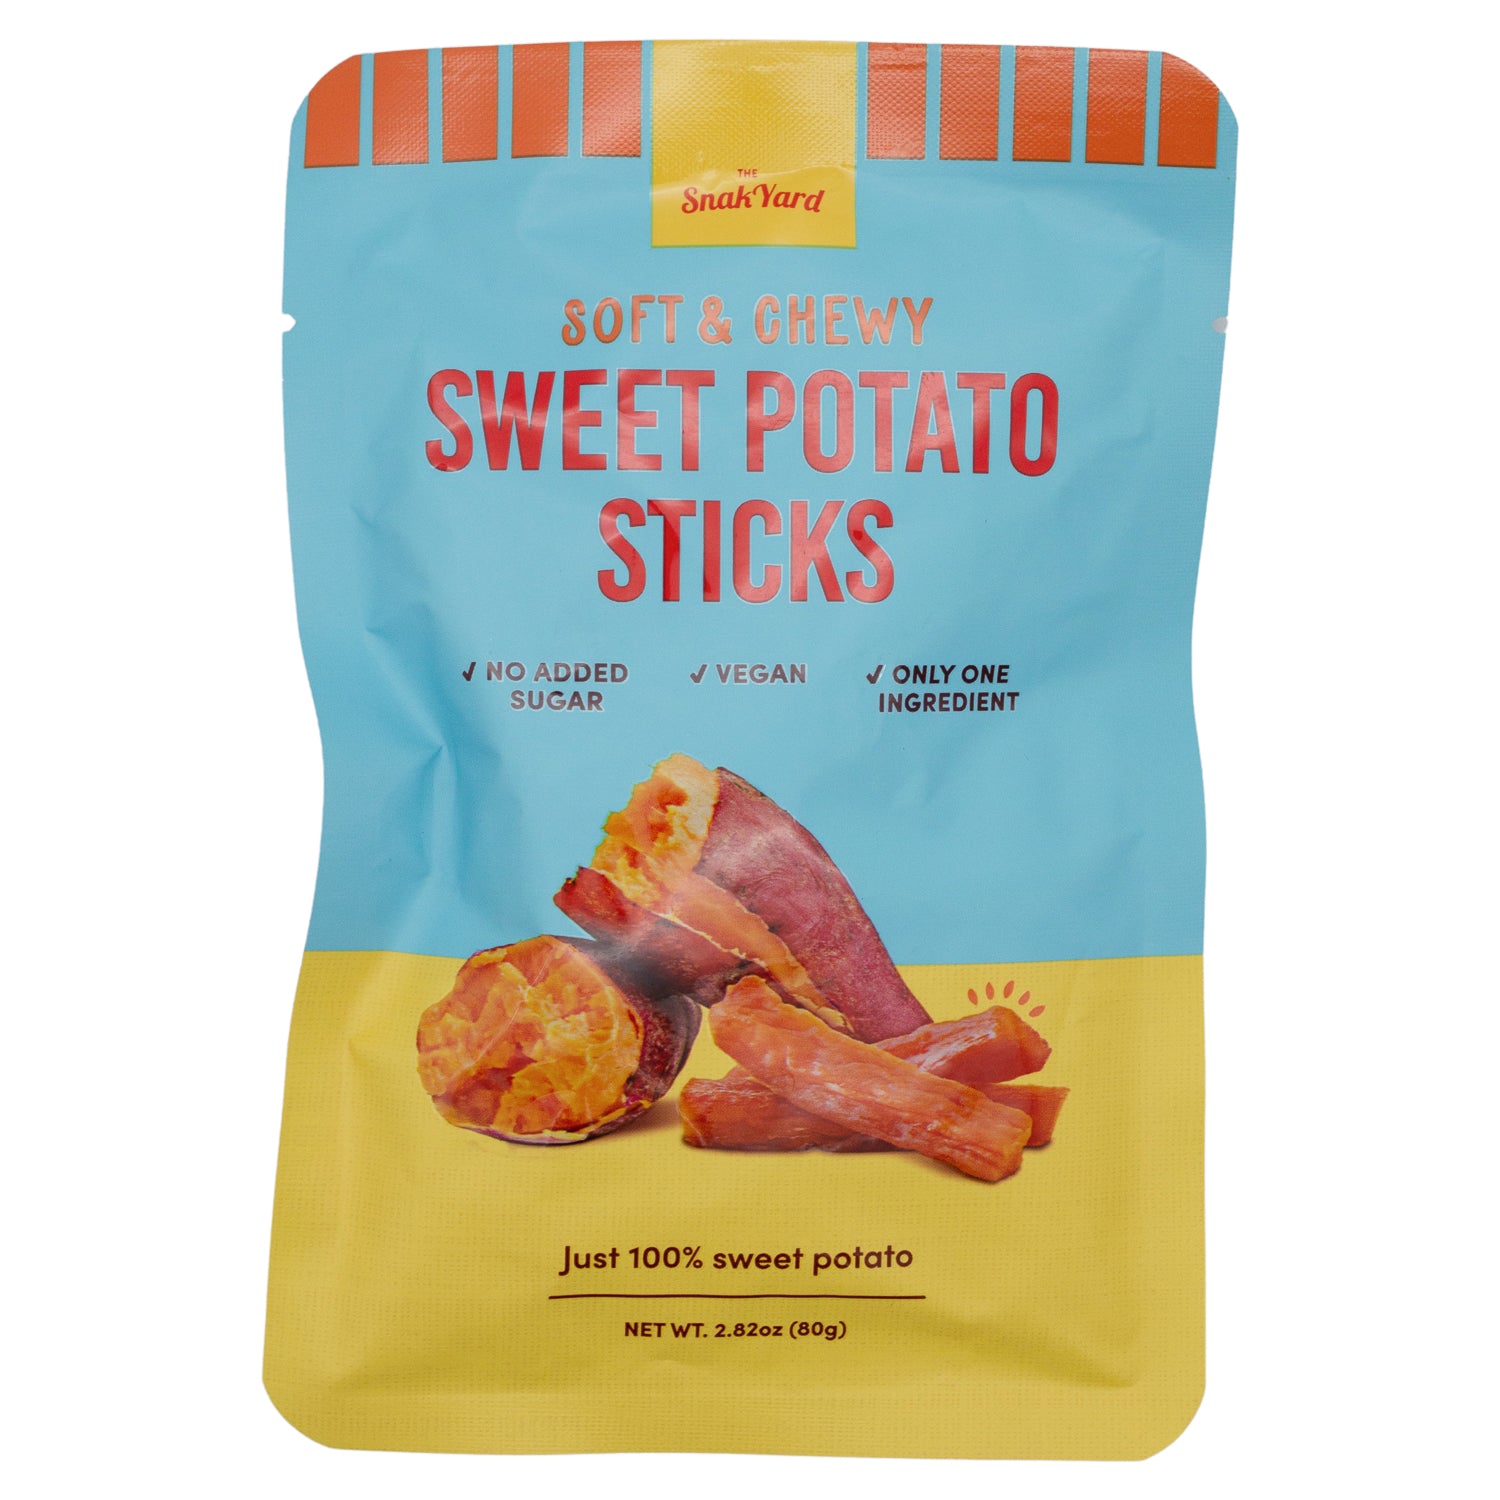 Snak Yard Sweet Potato Sticks The Snak Yard 